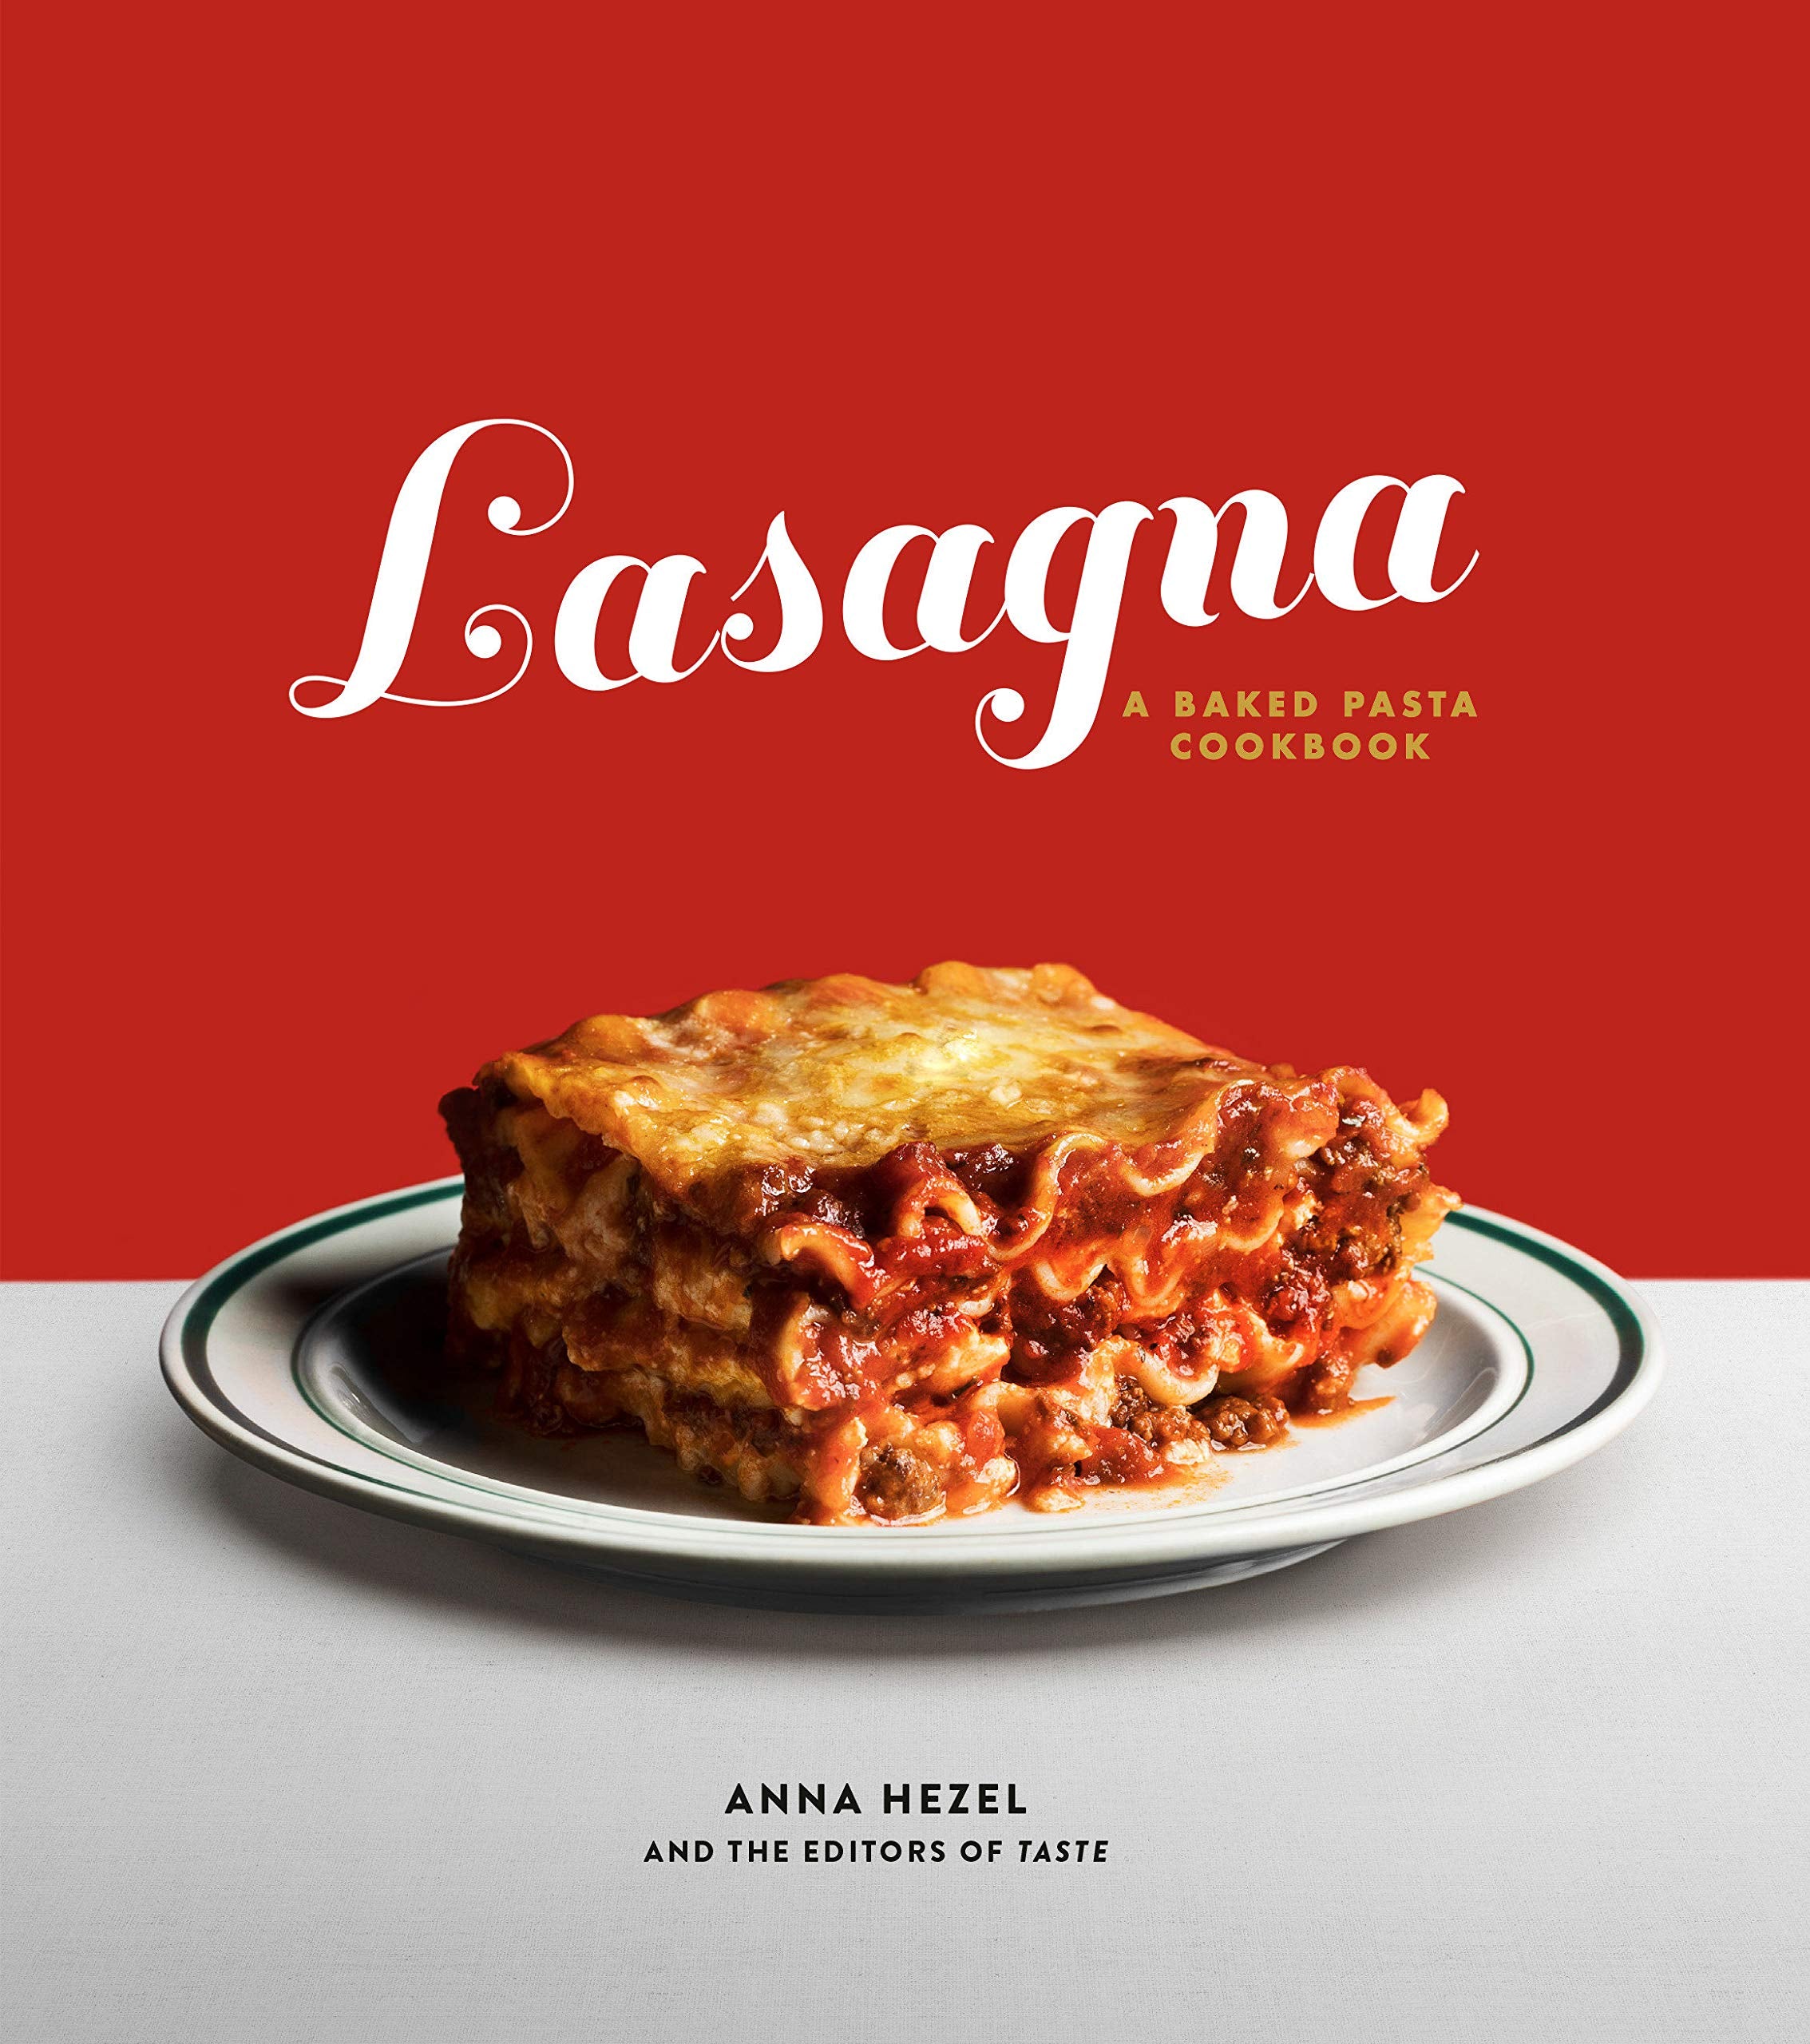 Lasagna: A Baked Pasta Cookbook (Anna Hezel)